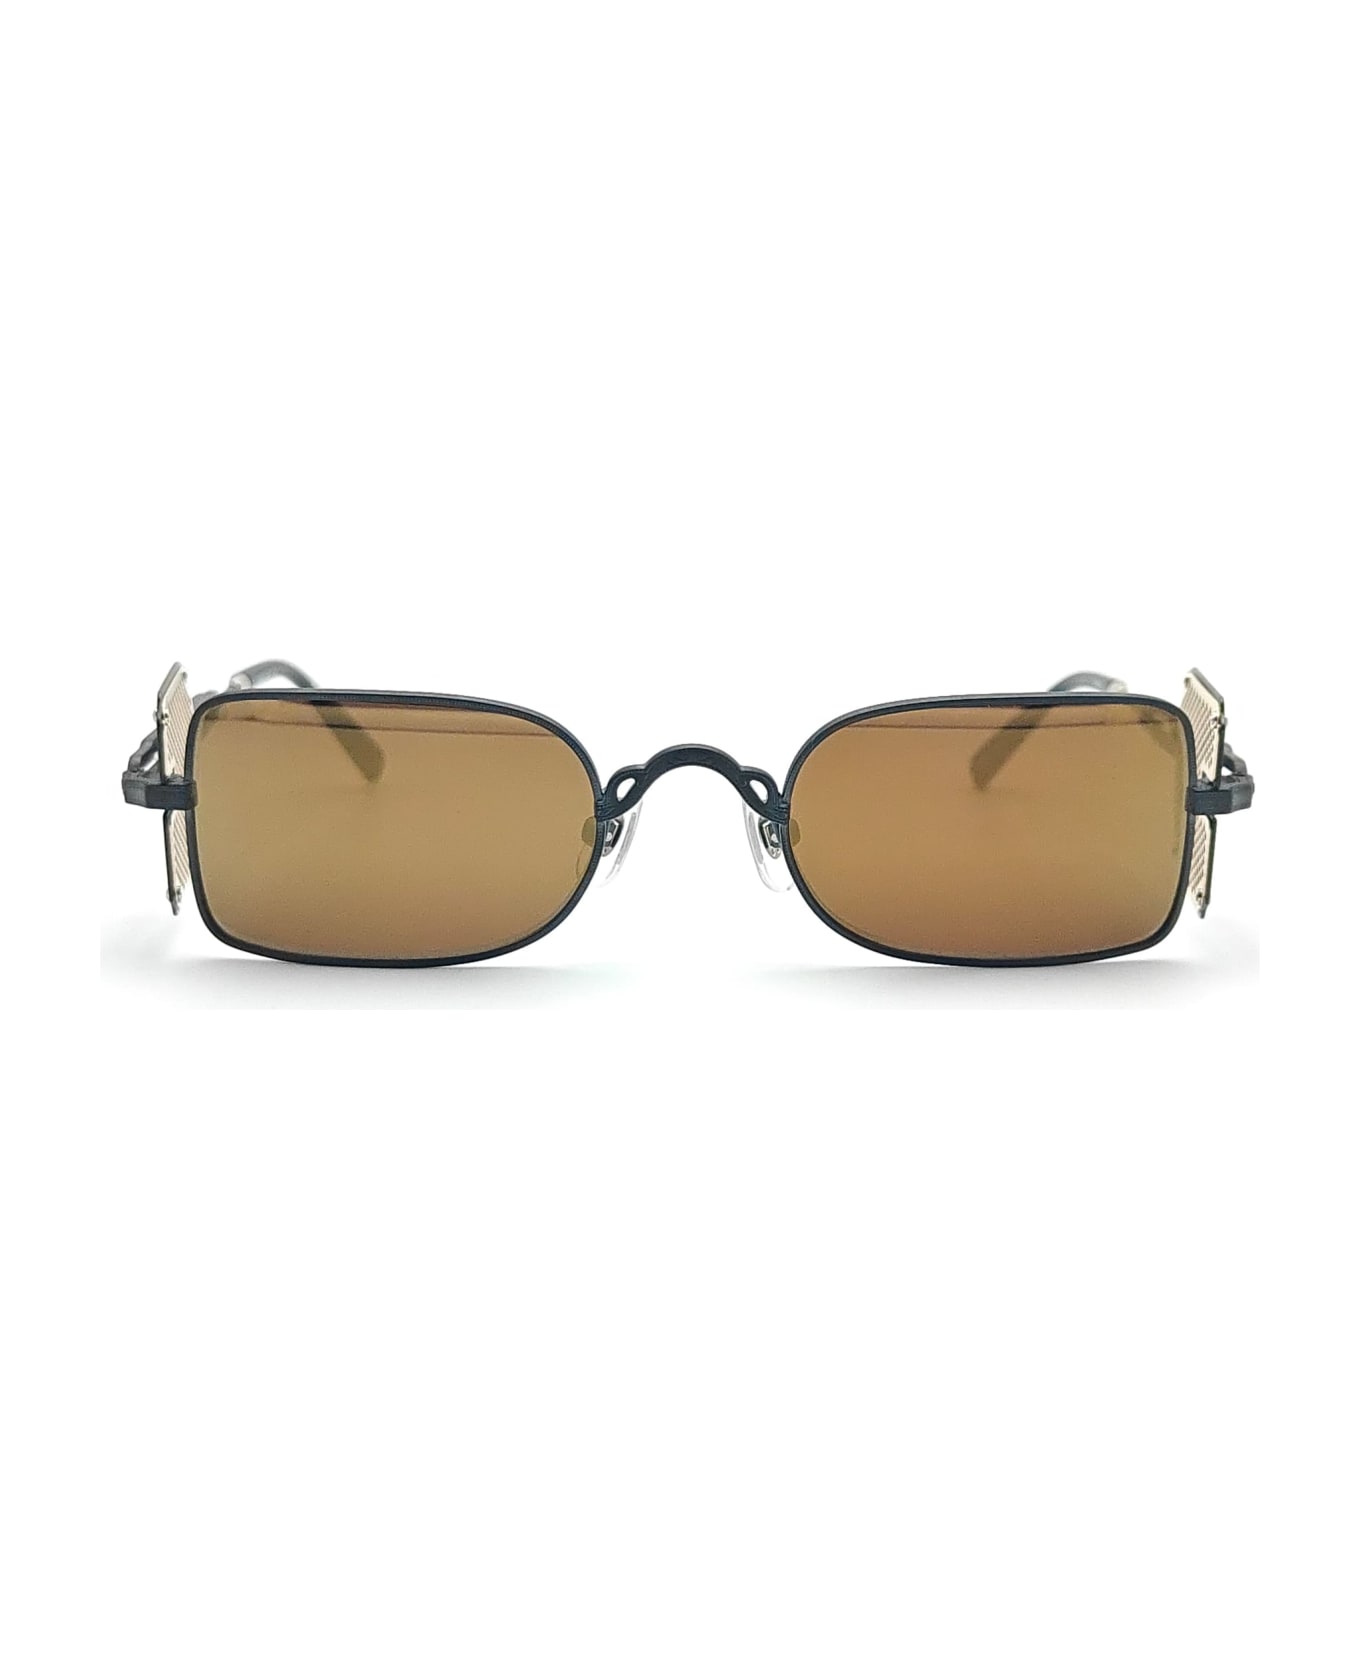 Matsuda 10611h - Matte Black / Brushed Gold Sunglasses - Matte black サングラス